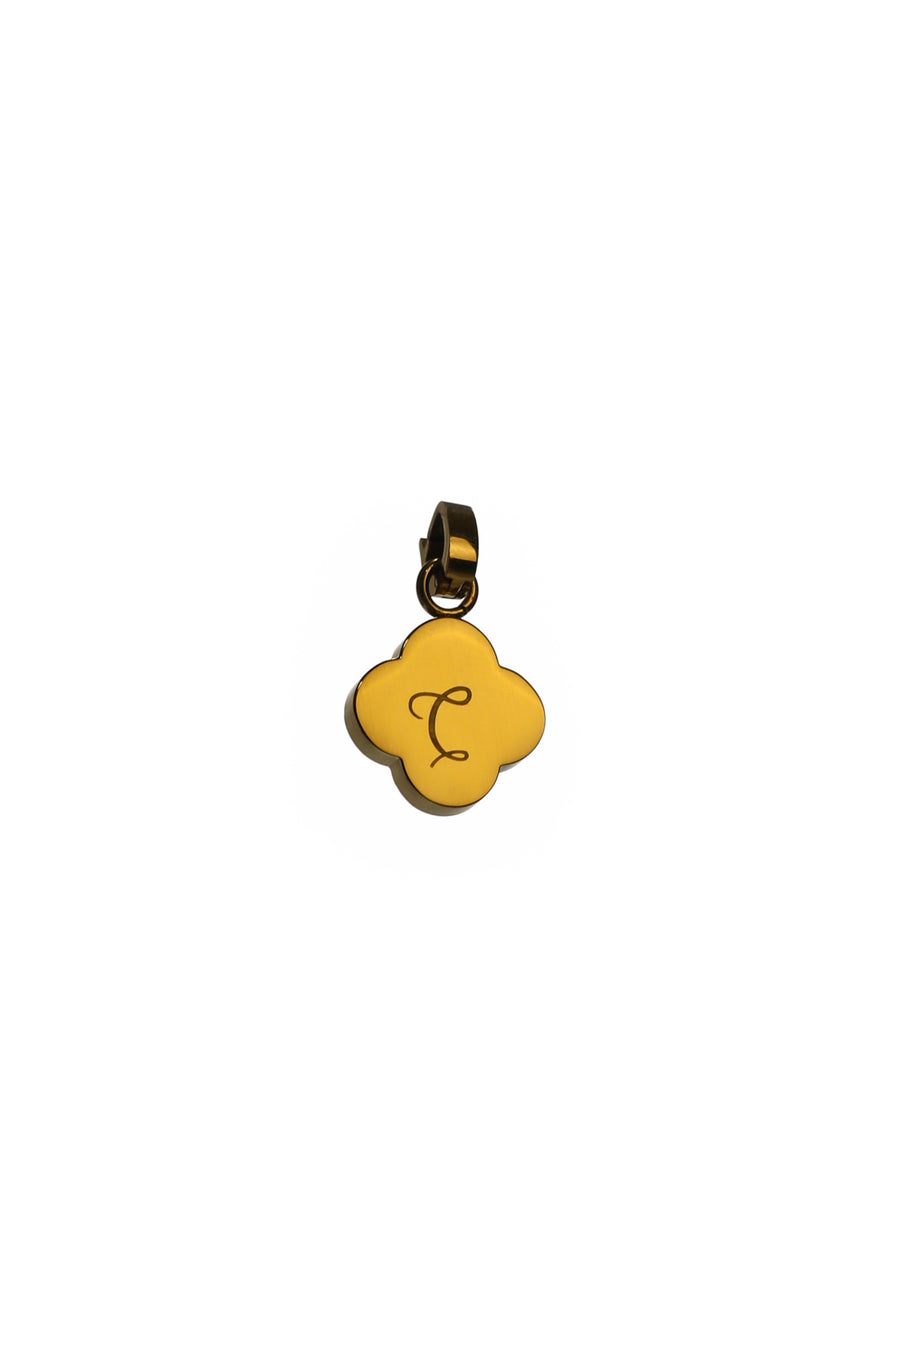 "C" Carisma Mini Letter Pendant